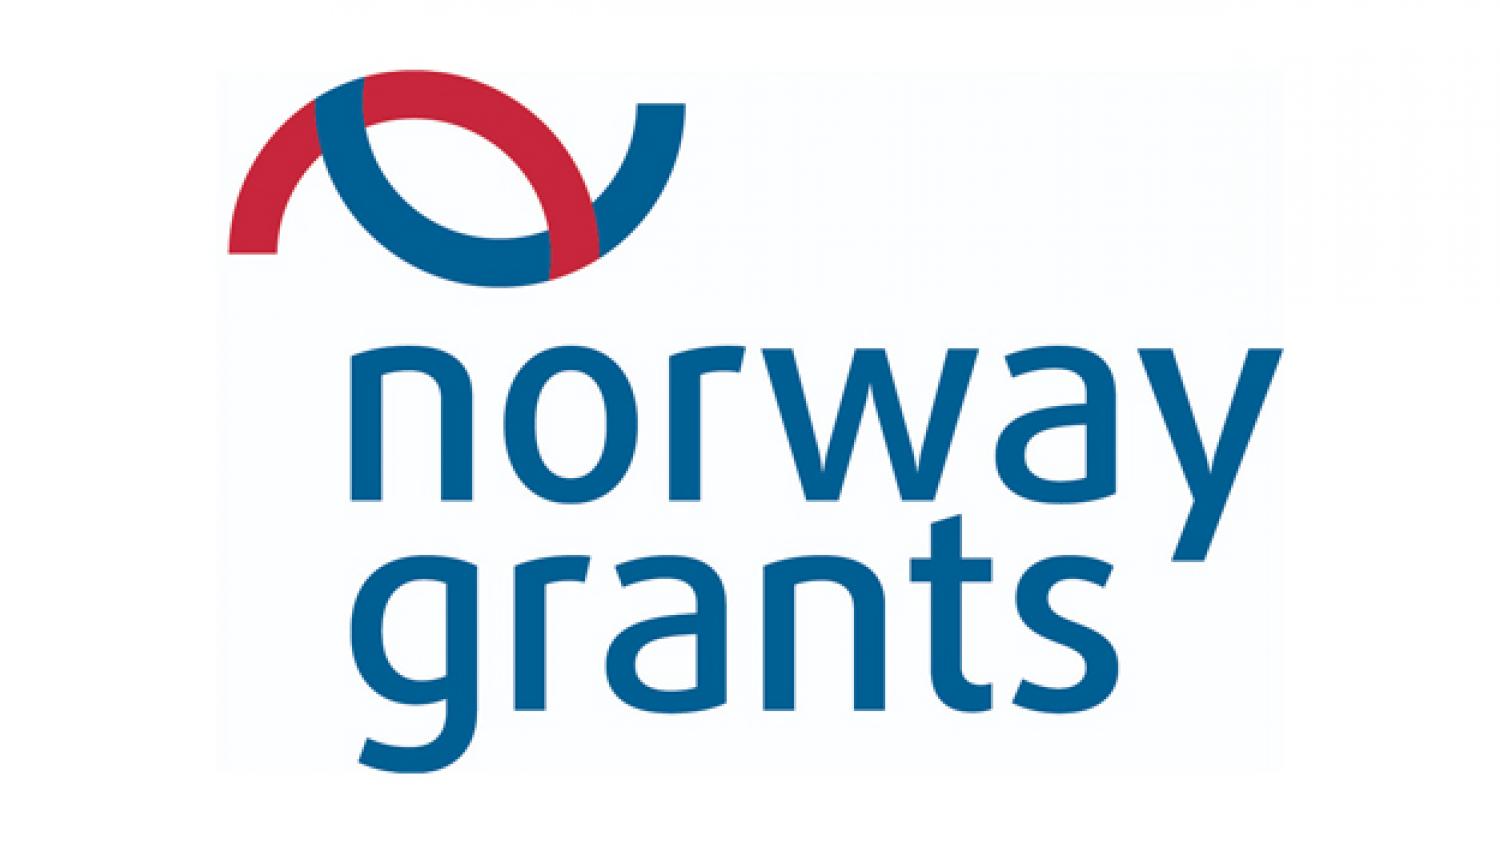 Norway grants logo